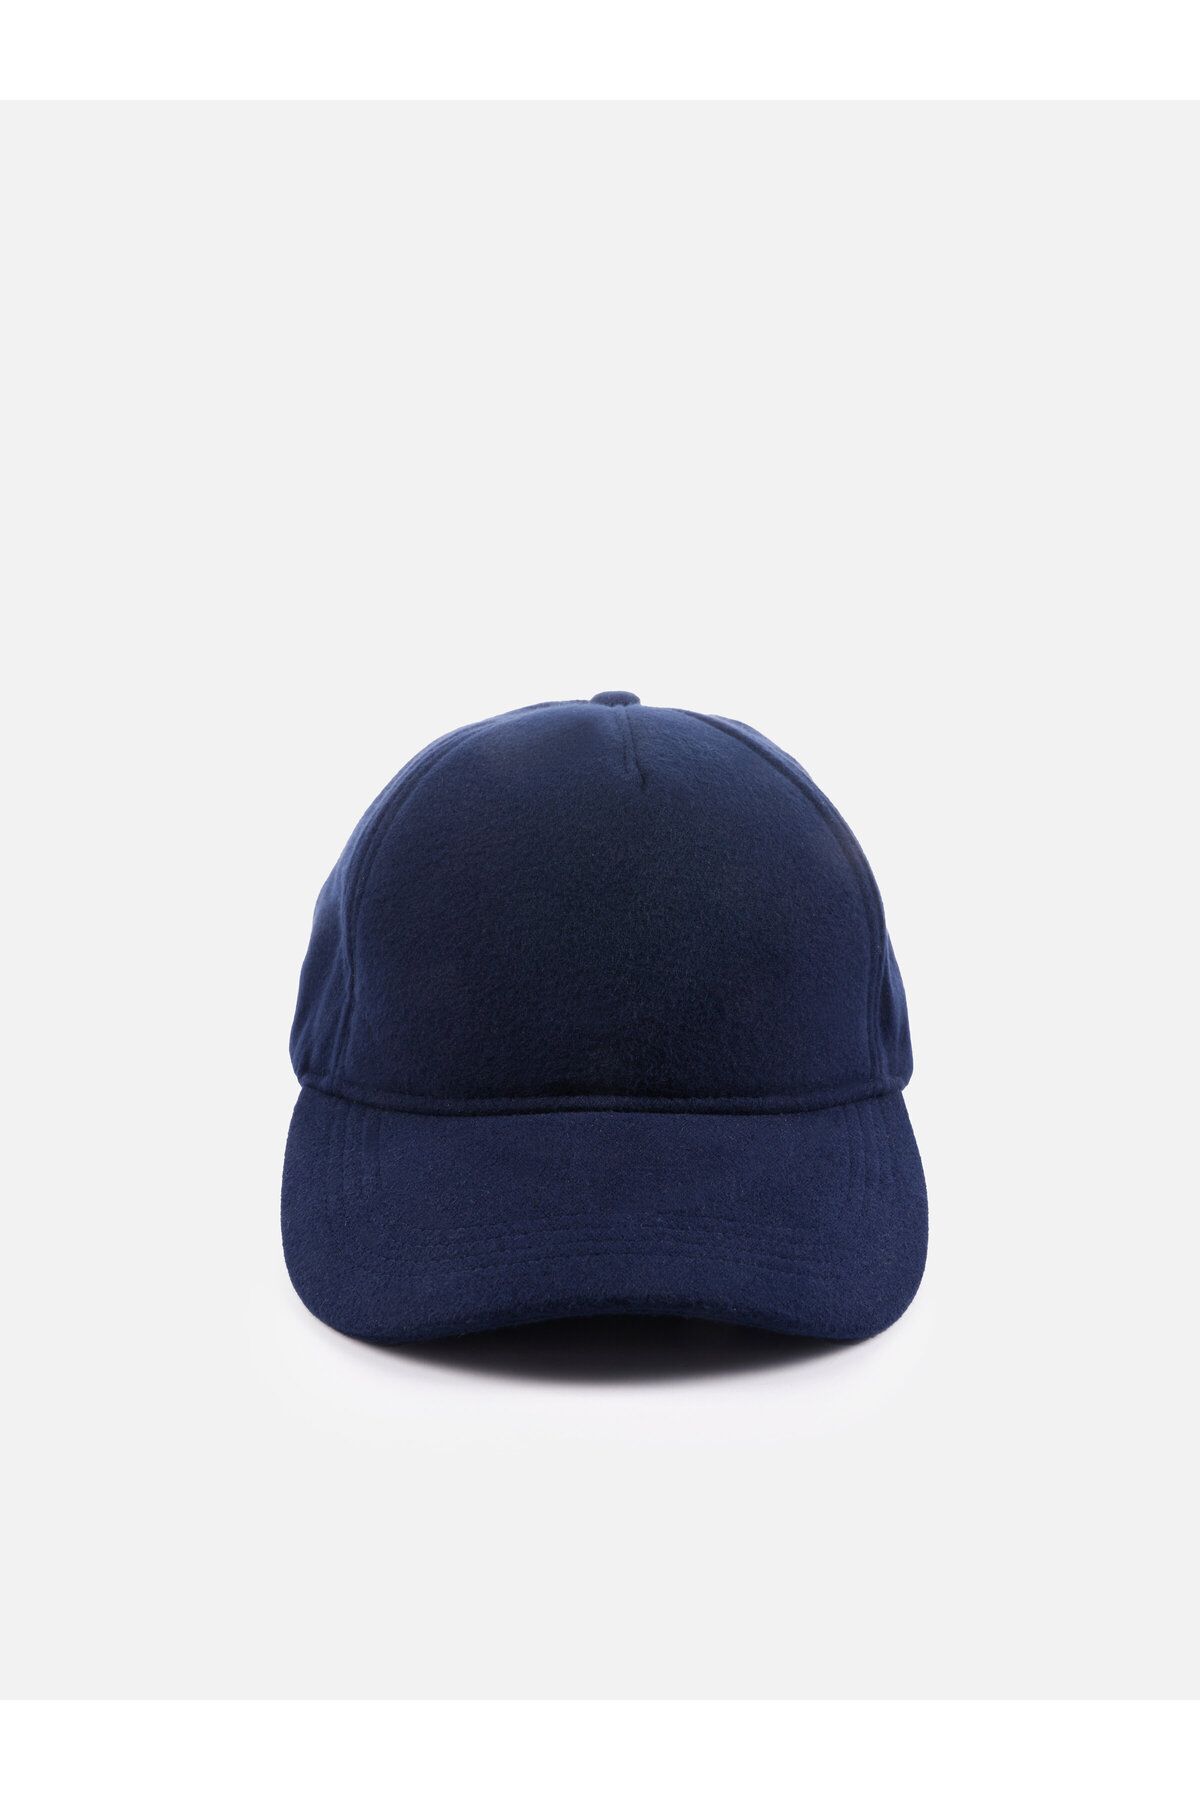 Colin’s Basic Lacivert Erkek Şapka